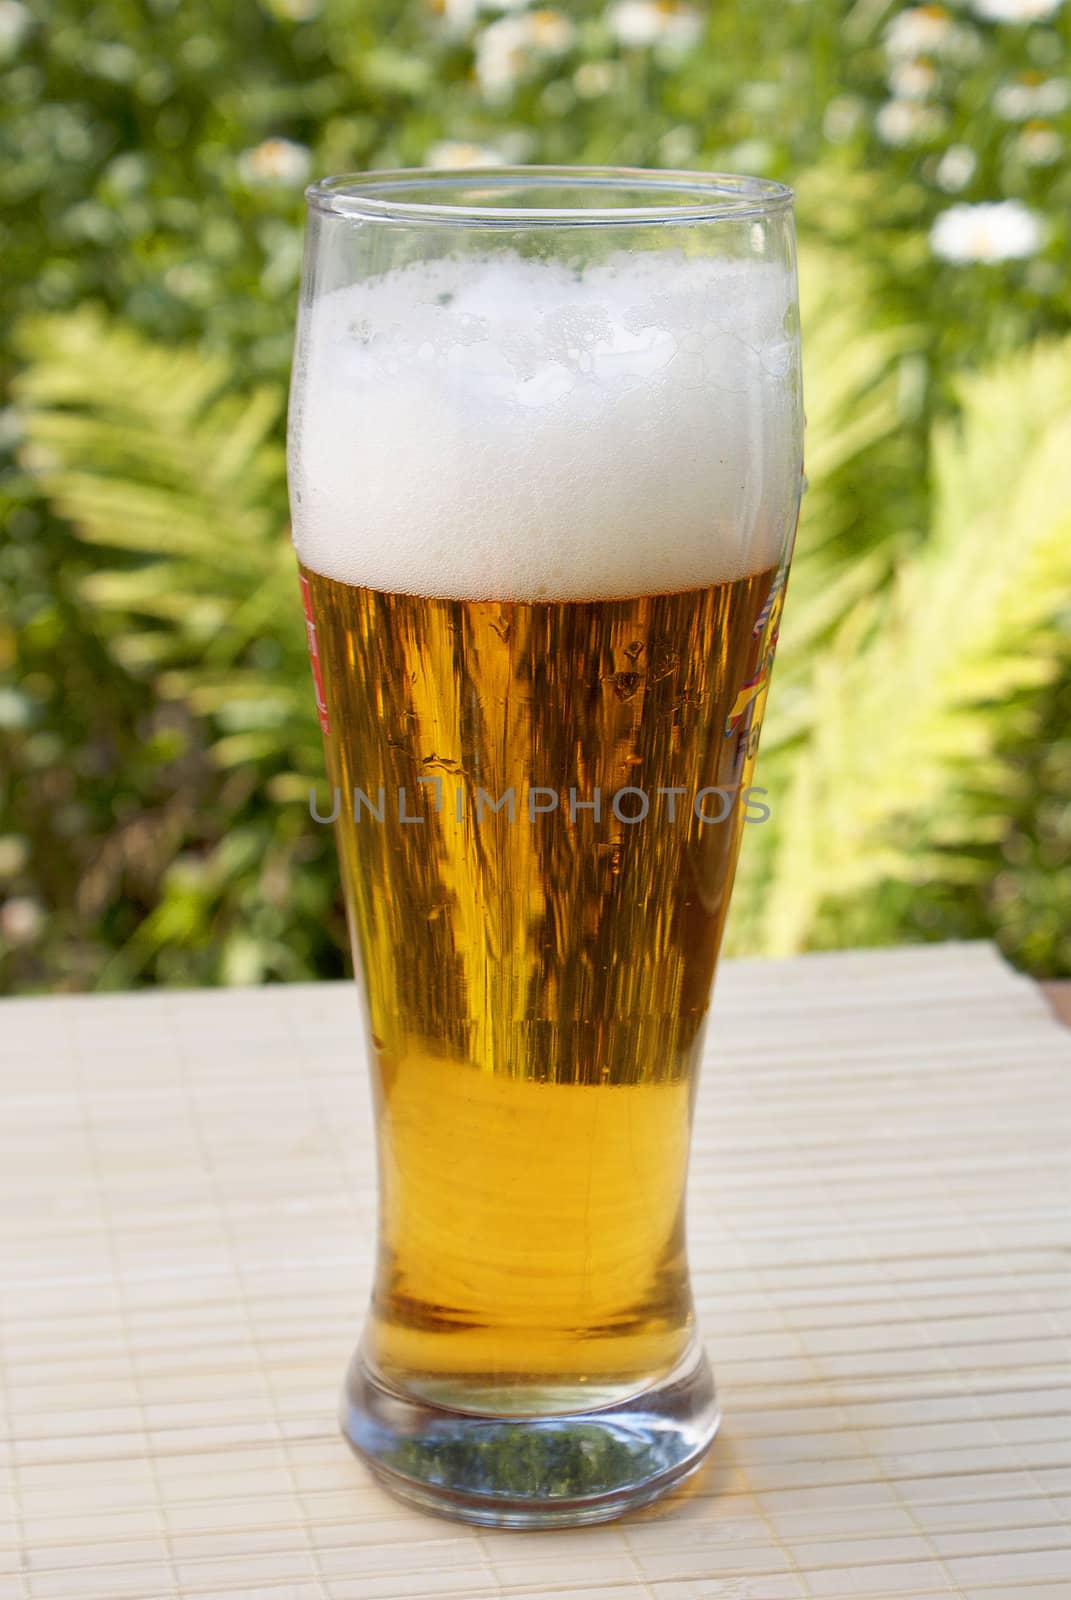 The big glass dark of cold barley beer by sergey150770SV